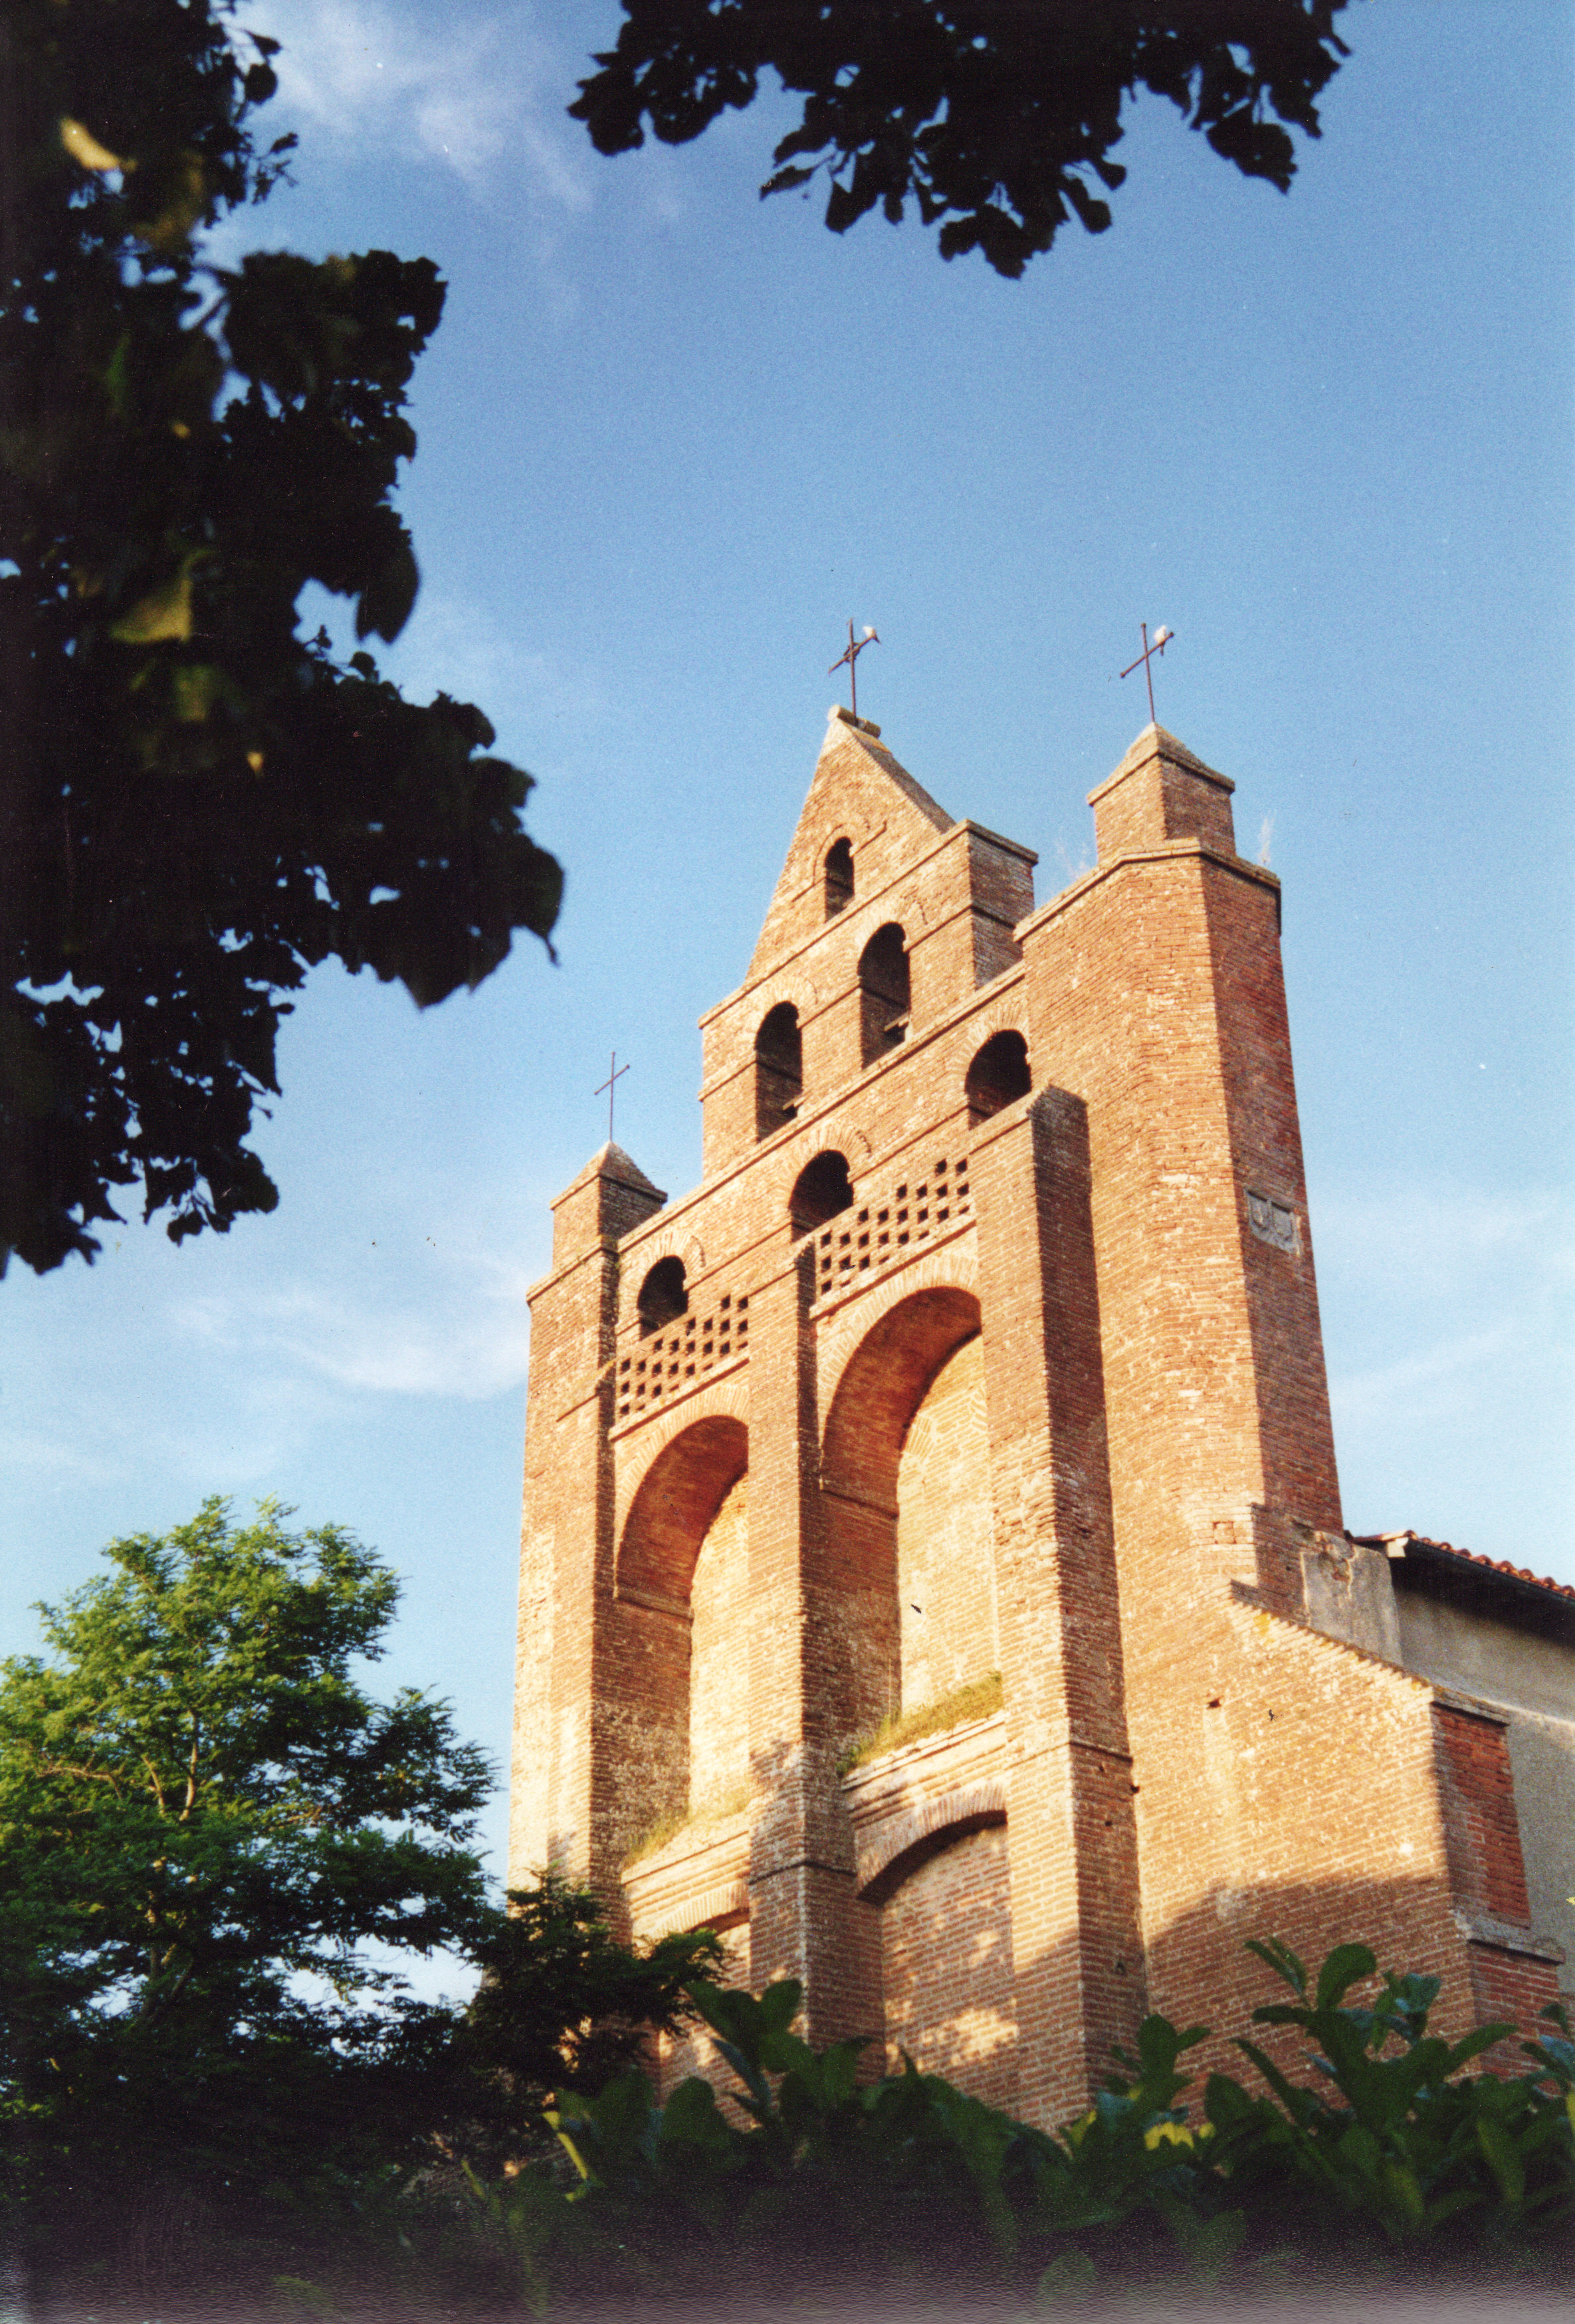 Le clocher mur de Caignac